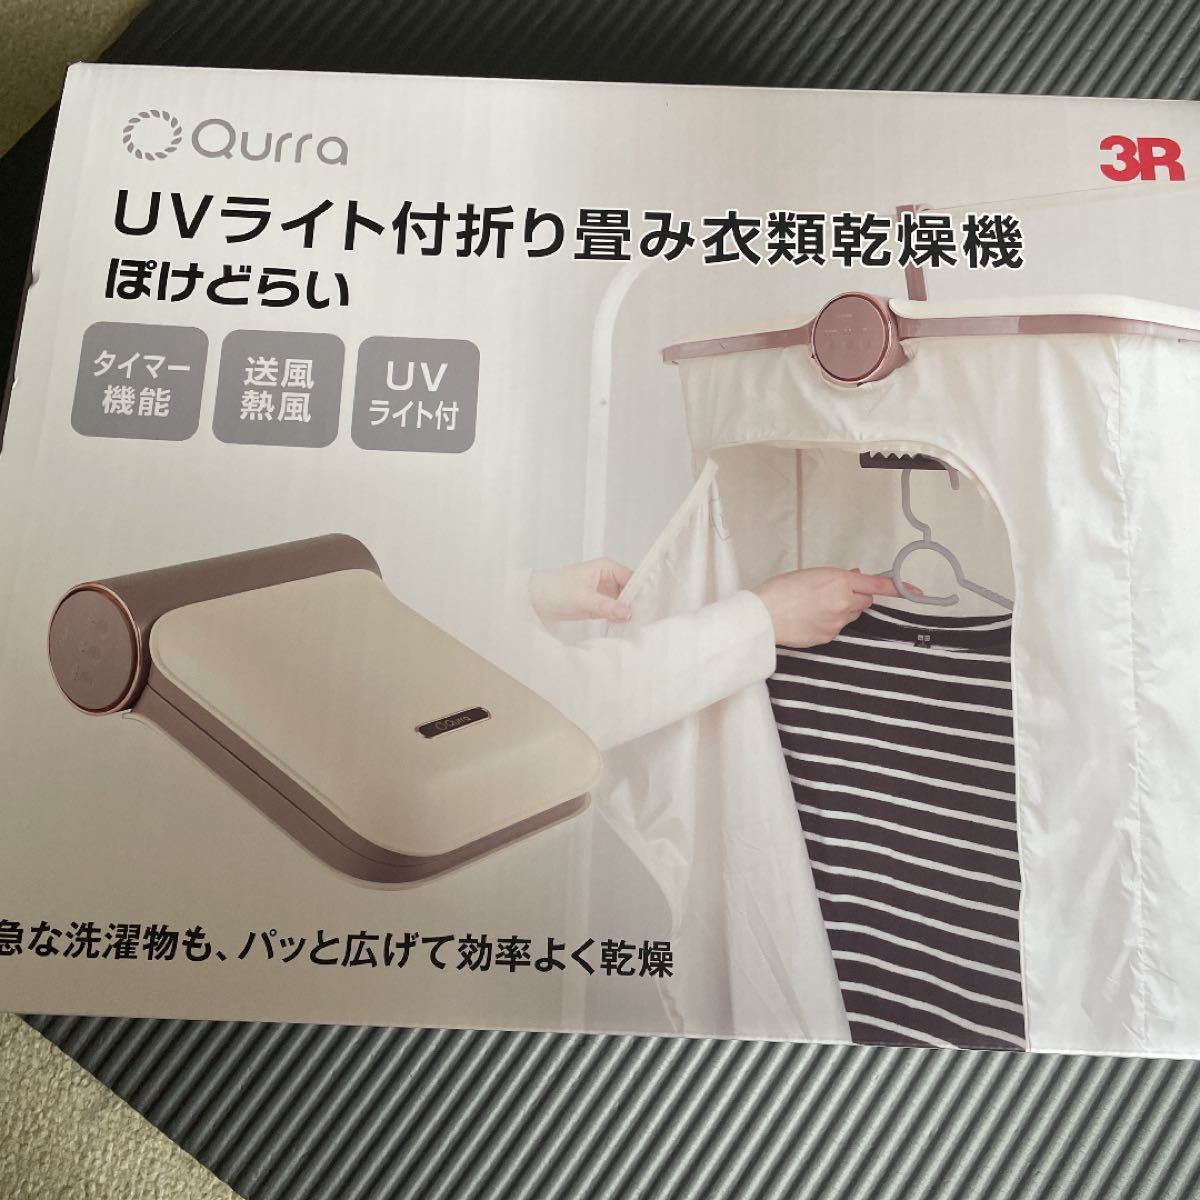 Qurra(ぽけどらい) 衣類乾燥機 小型 温風 70℃ 送風 UVライト OFF